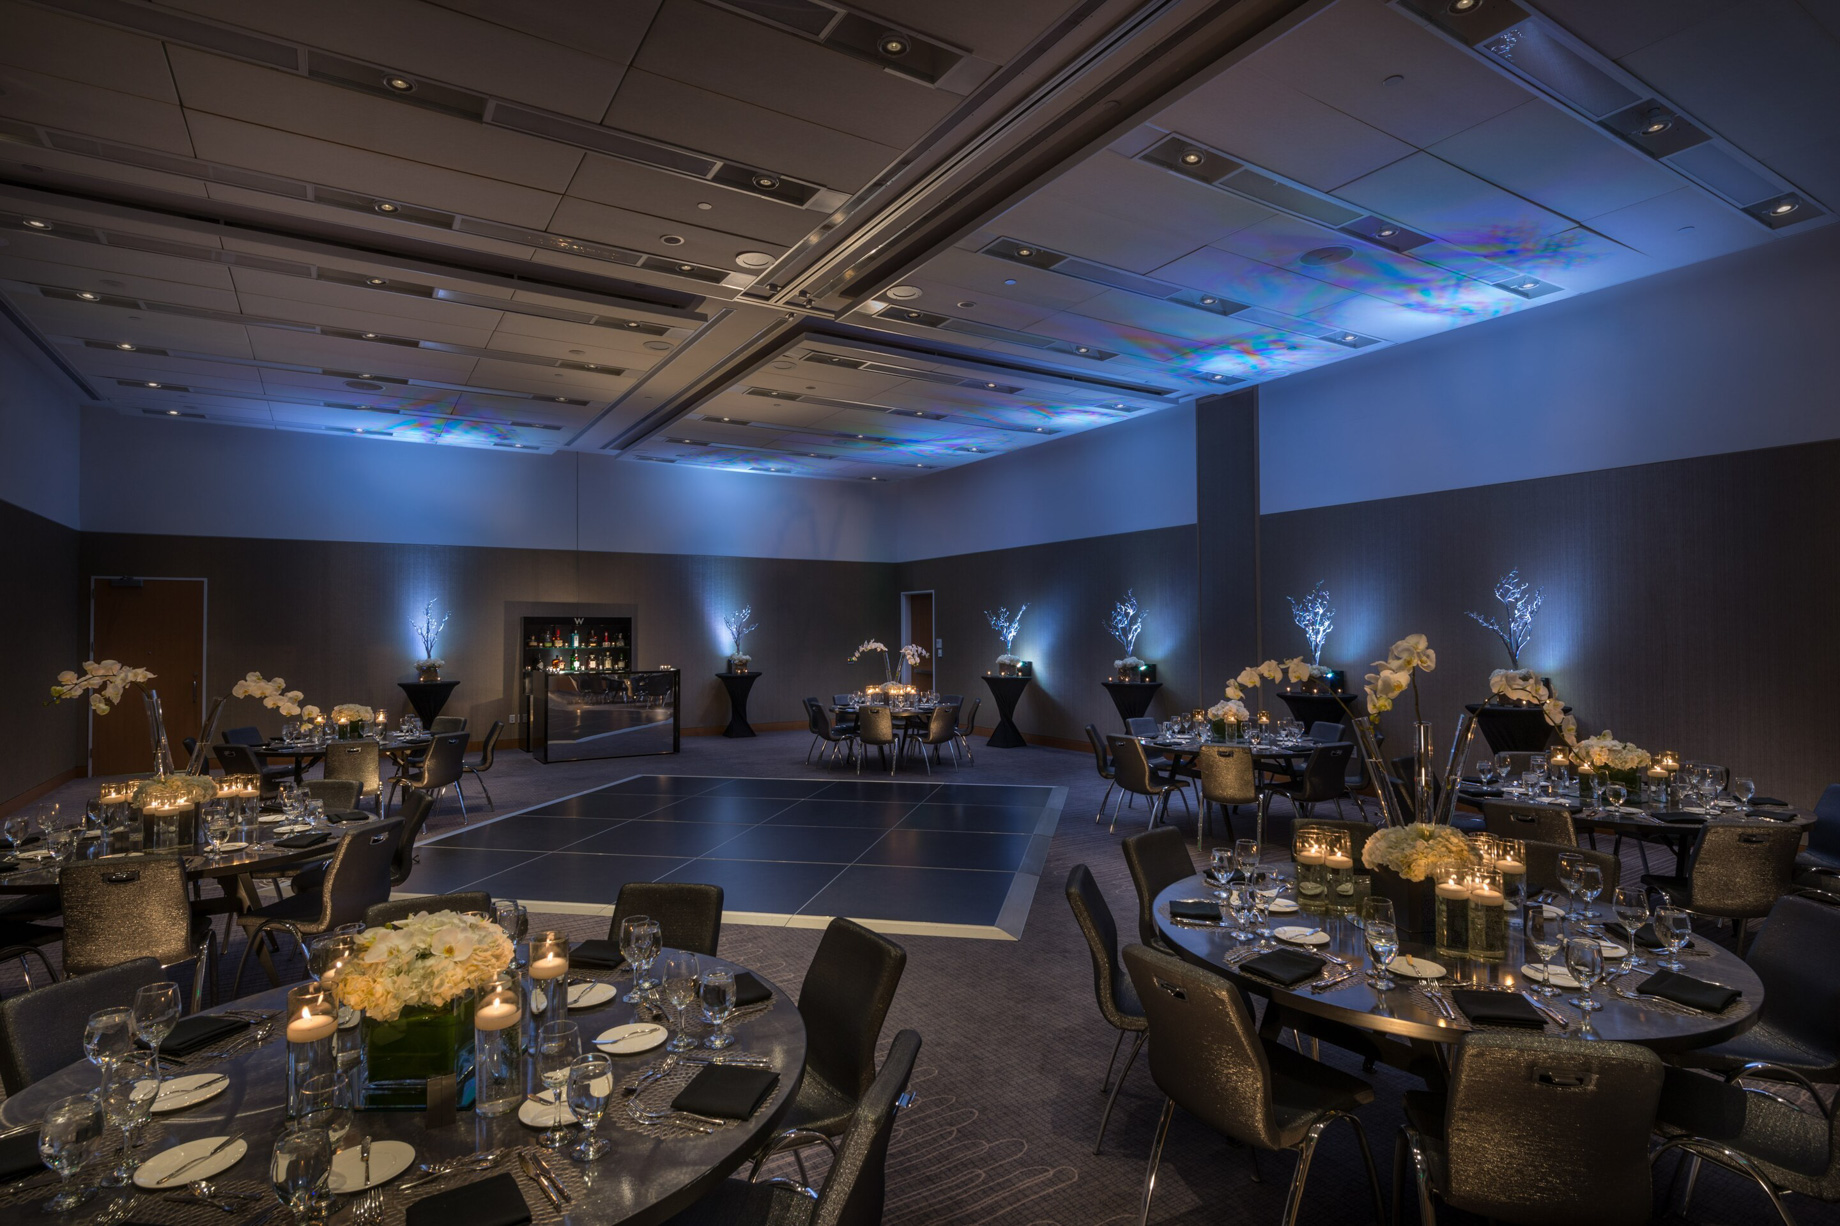 W Boston Hotel – Boston, MA, USA – Great Room Banquet Setup